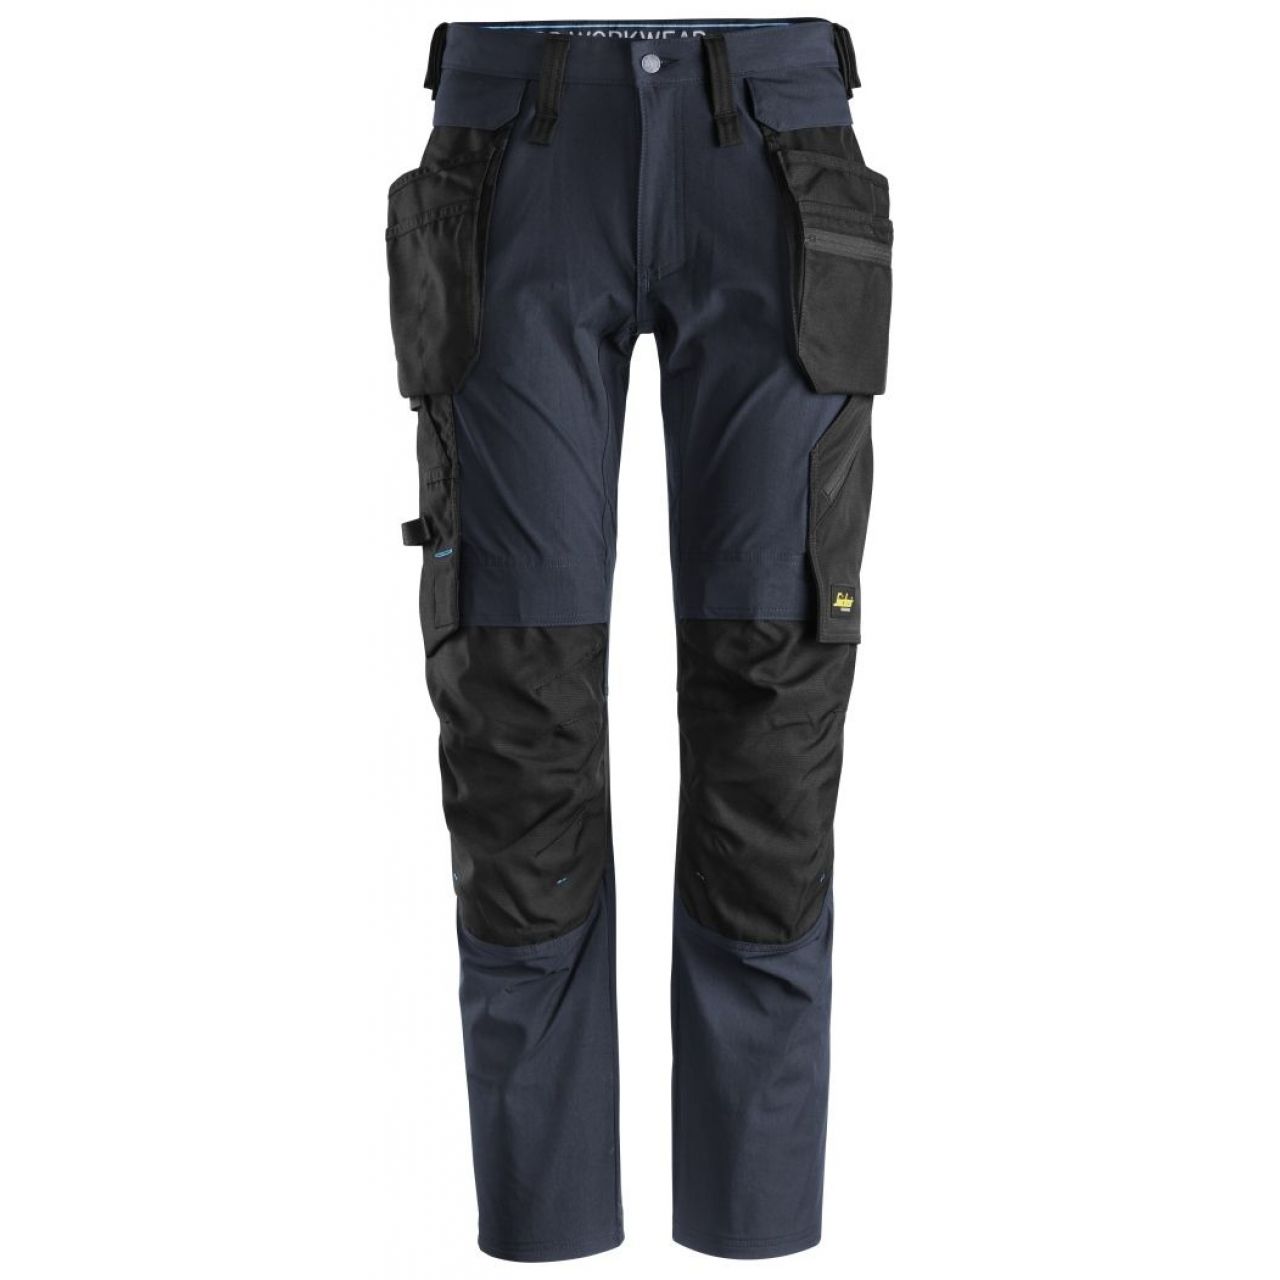 Pantalon + bolsillos flotantes desmontables LiteWork azul marino-negro talla 108